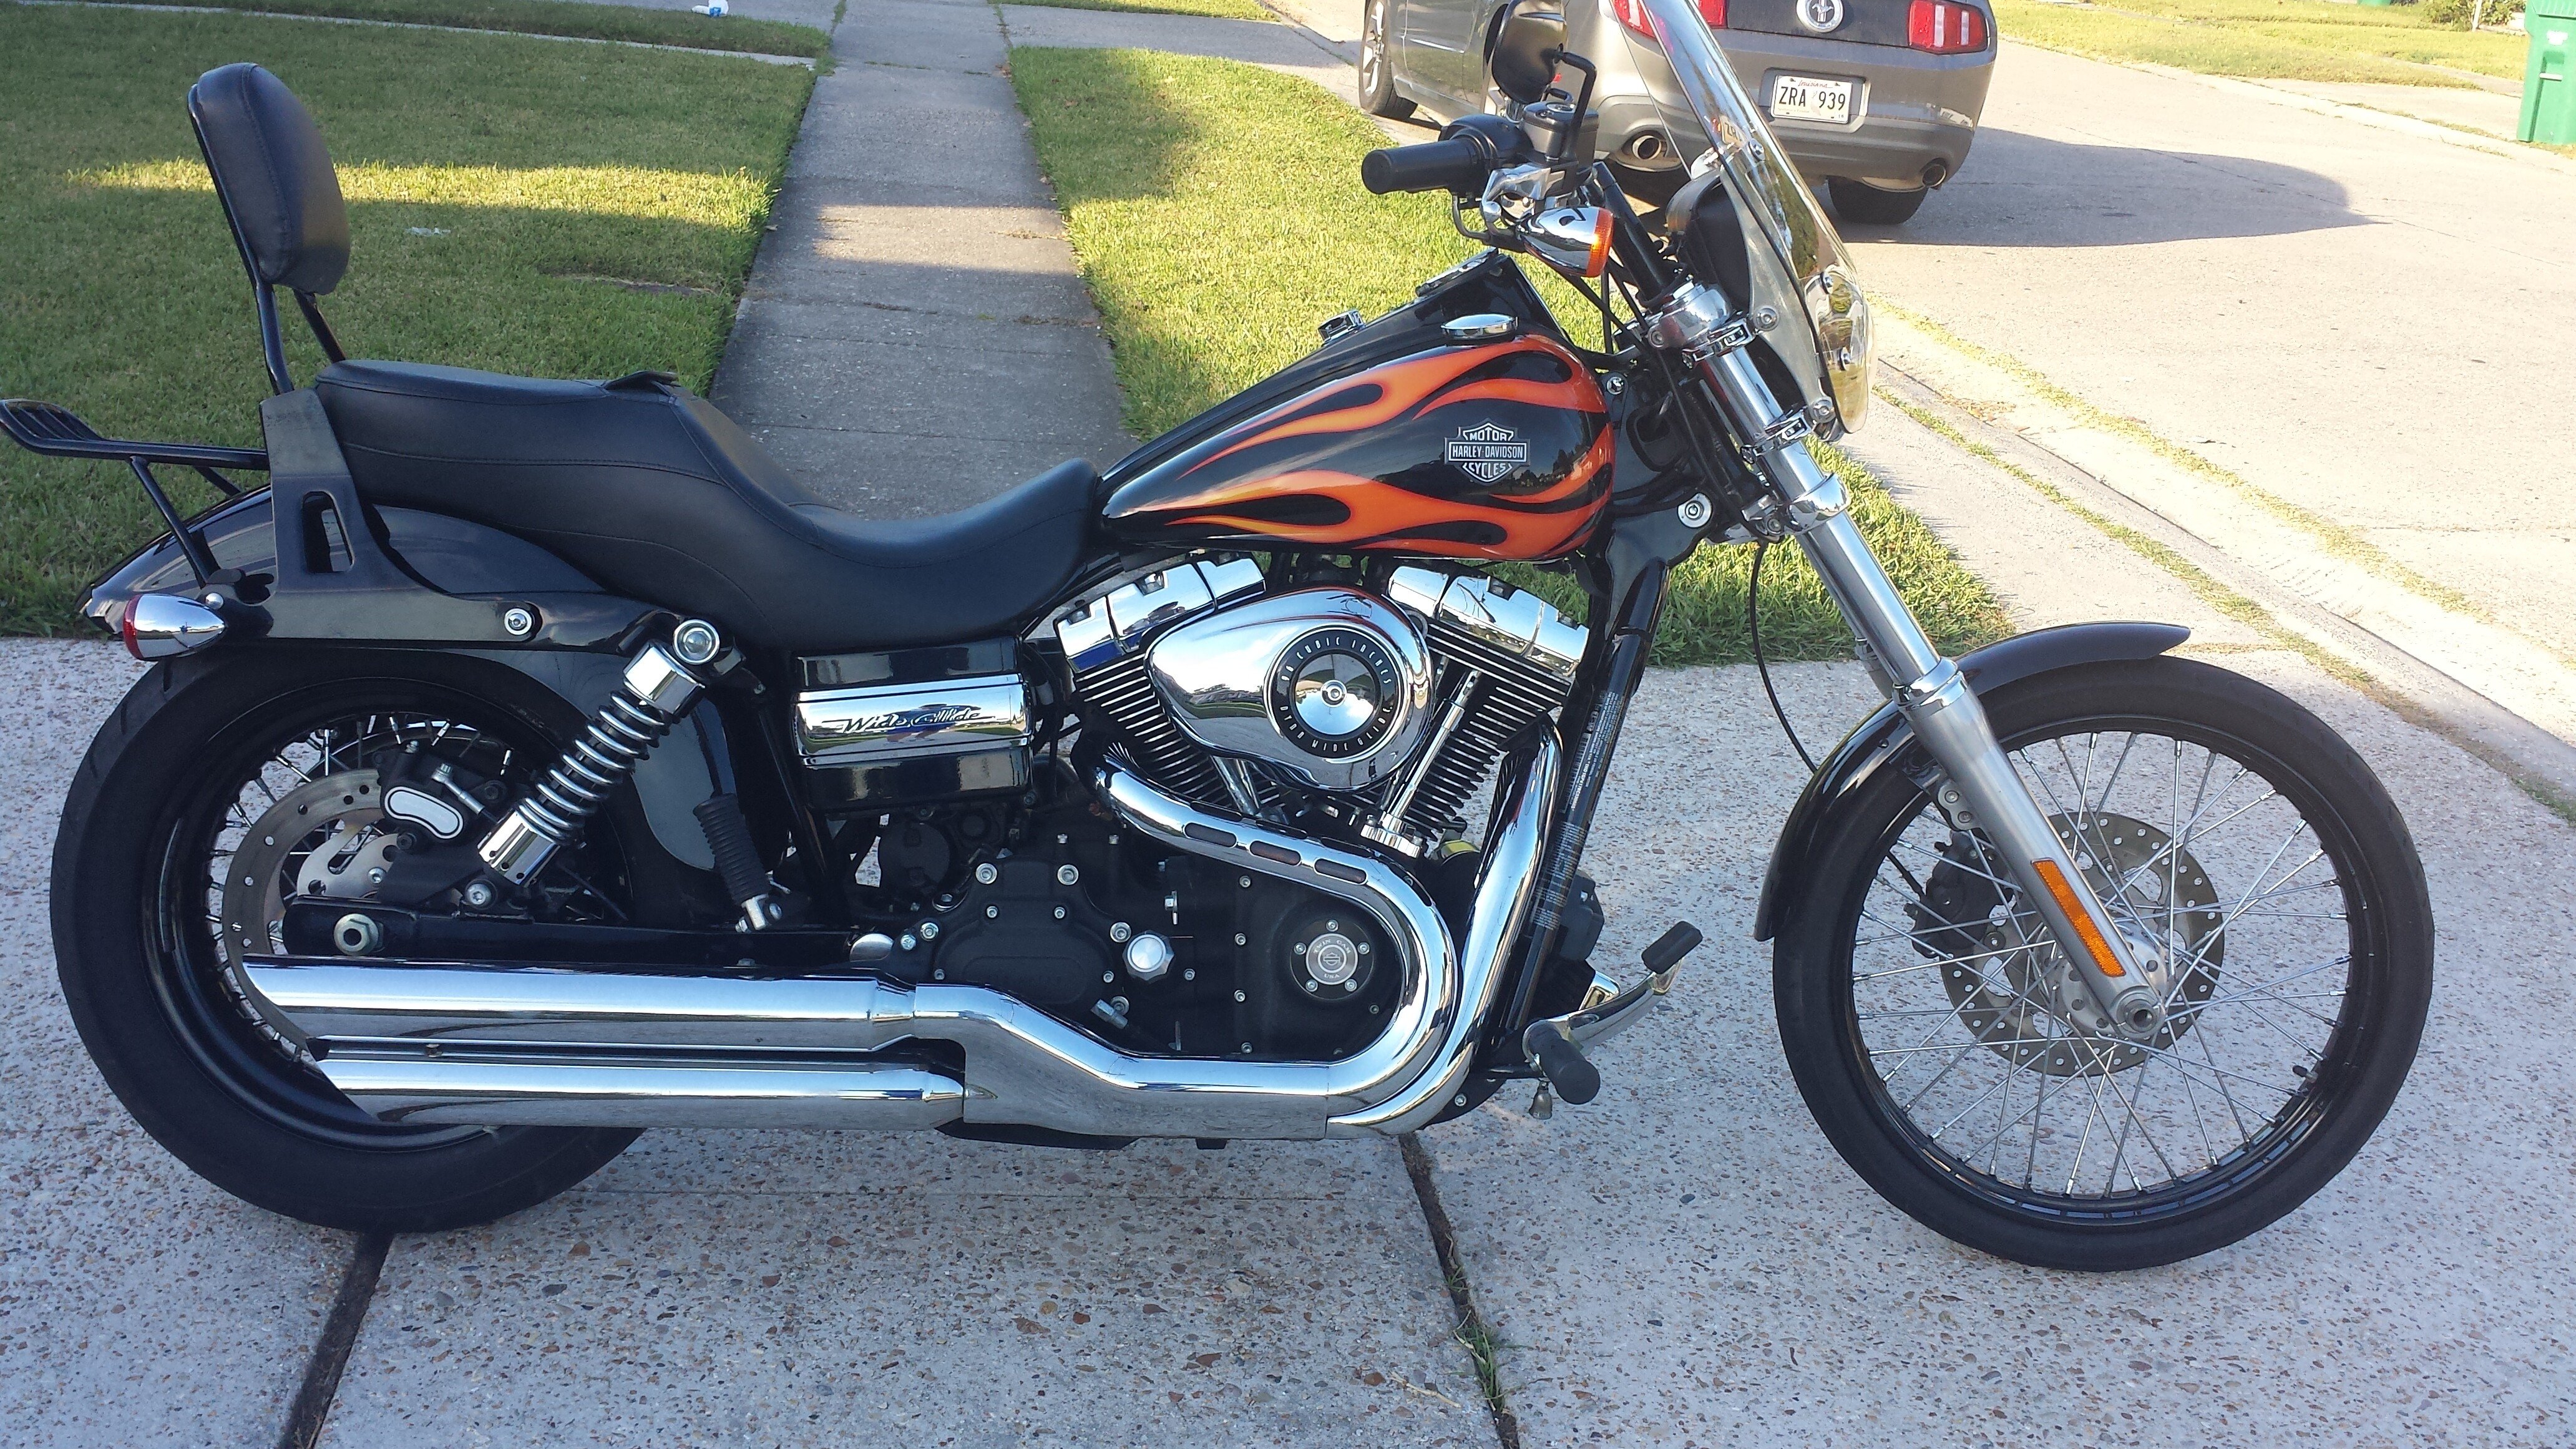 2011 Harley Davidson Dyna Wide Glide For Sale Near Jefferson Louisiana 70121 Motorcycles On Autotrader